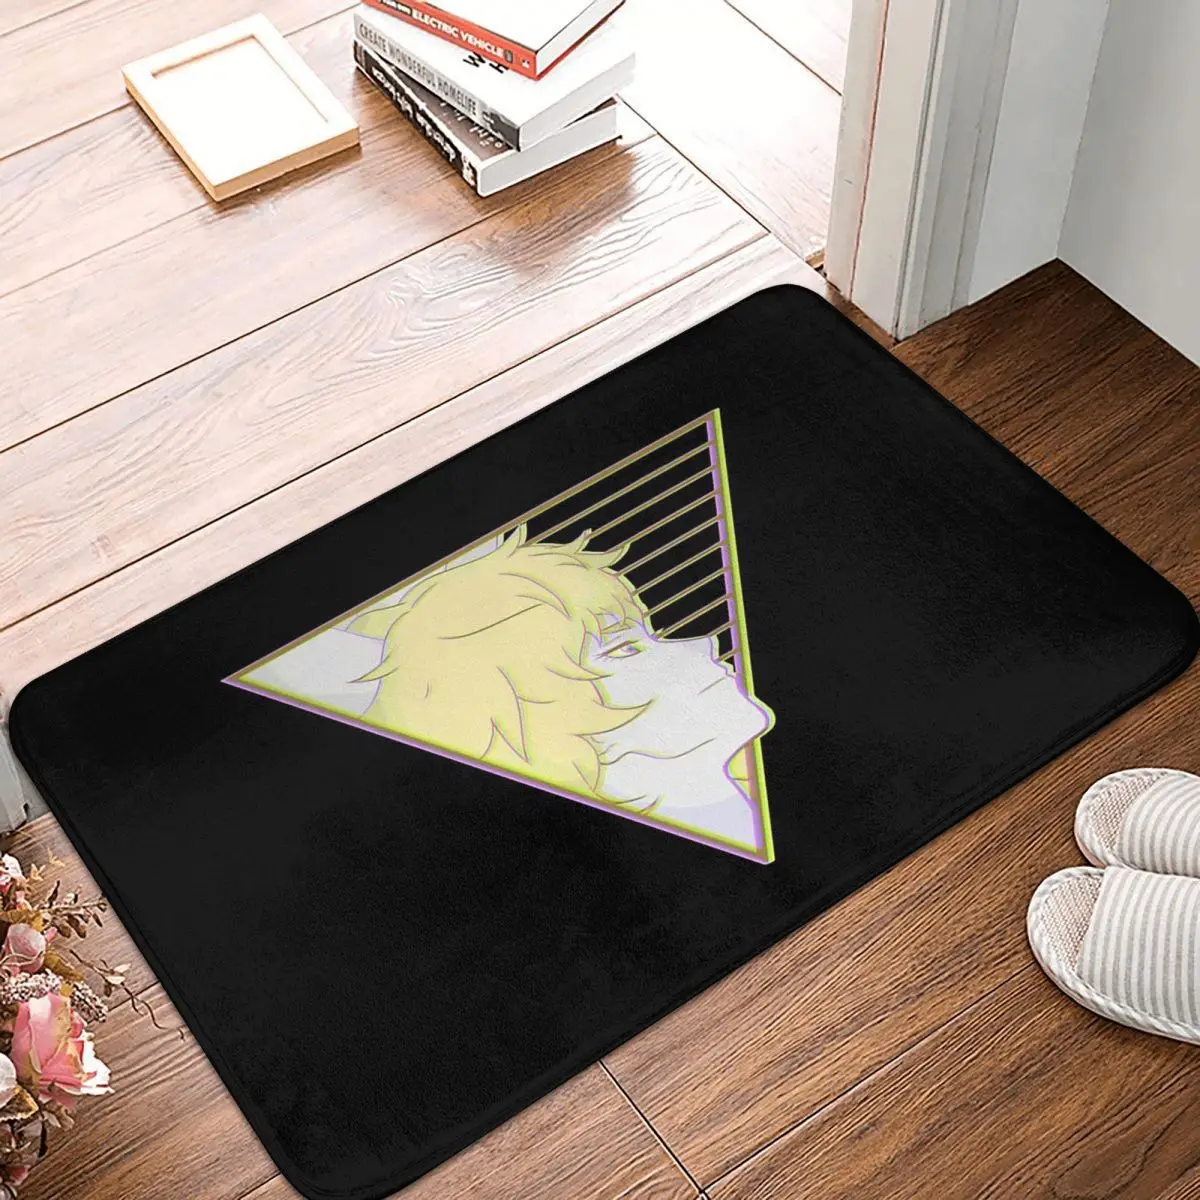 Devilman Crybaby Non-slip Doormat Ryo Asuka Vaporwave Living Room Kitchen Mat Prayer Carpet Flannel Pattern Decor